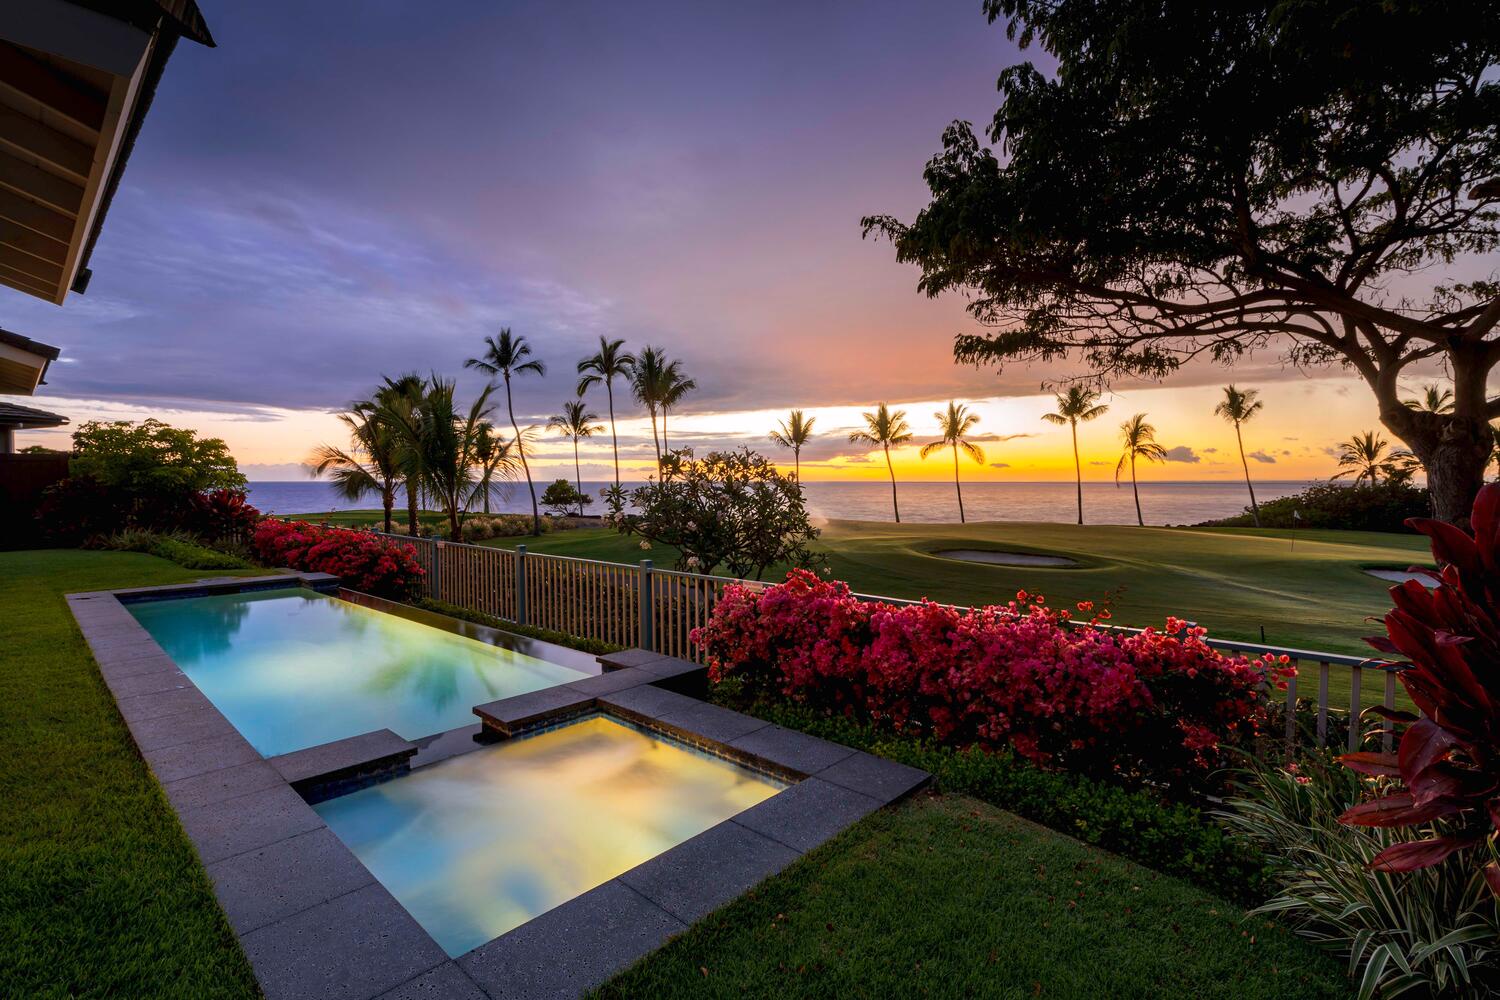 Kailua-Kona Vacation Rentals, Holua Kai #26 - Stunning sunset view over a luxurious pool.